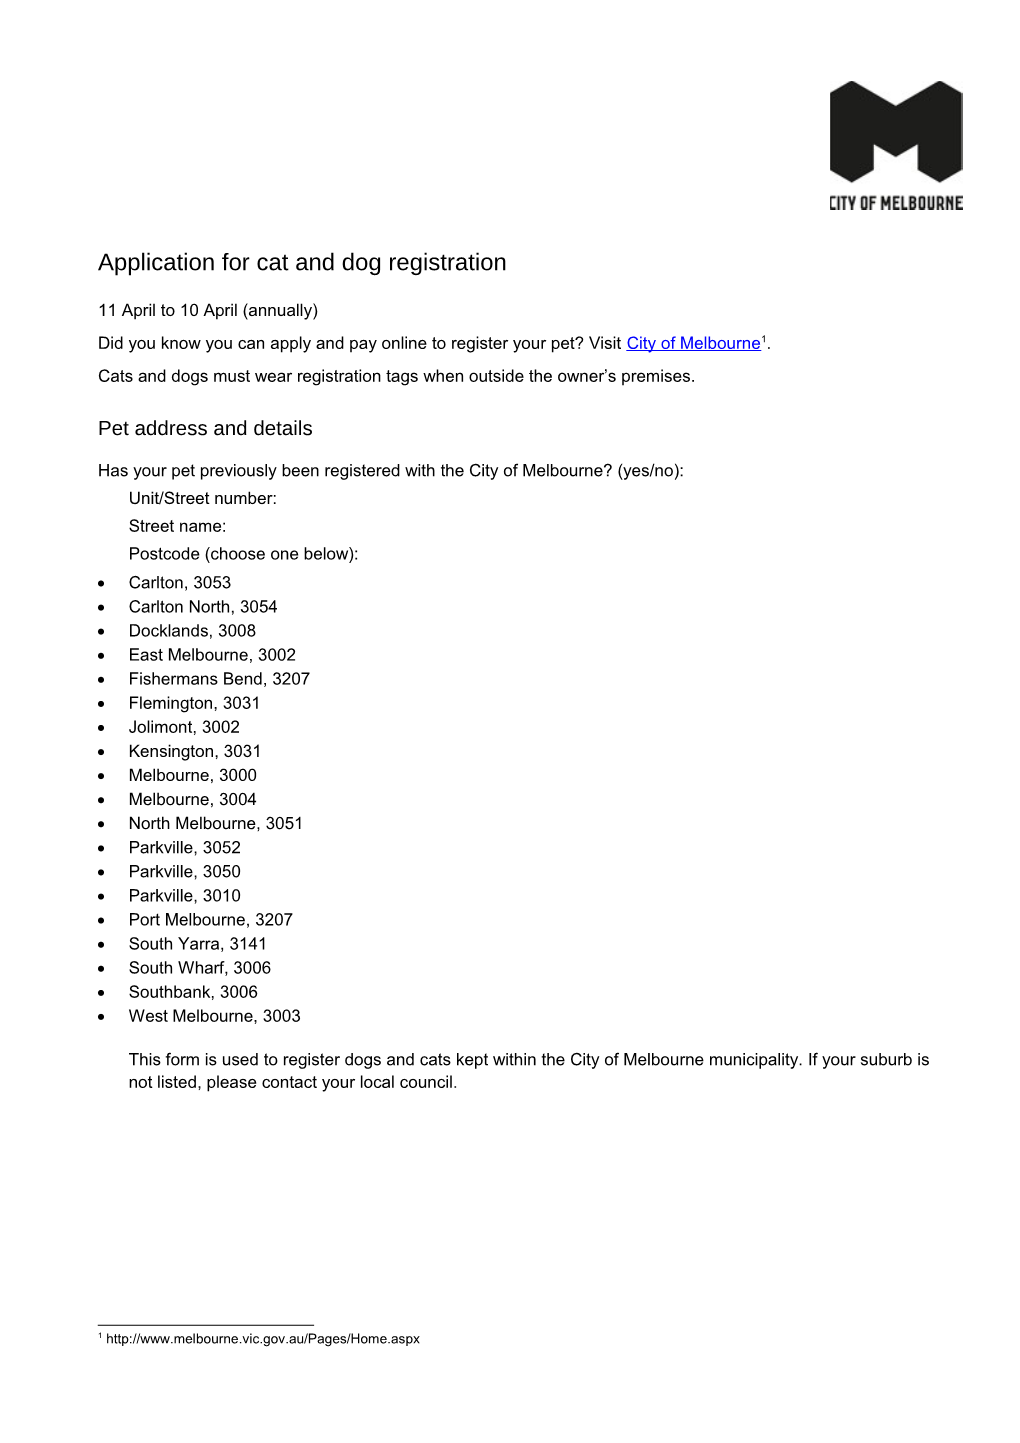 Application for Cat and Dog Registration